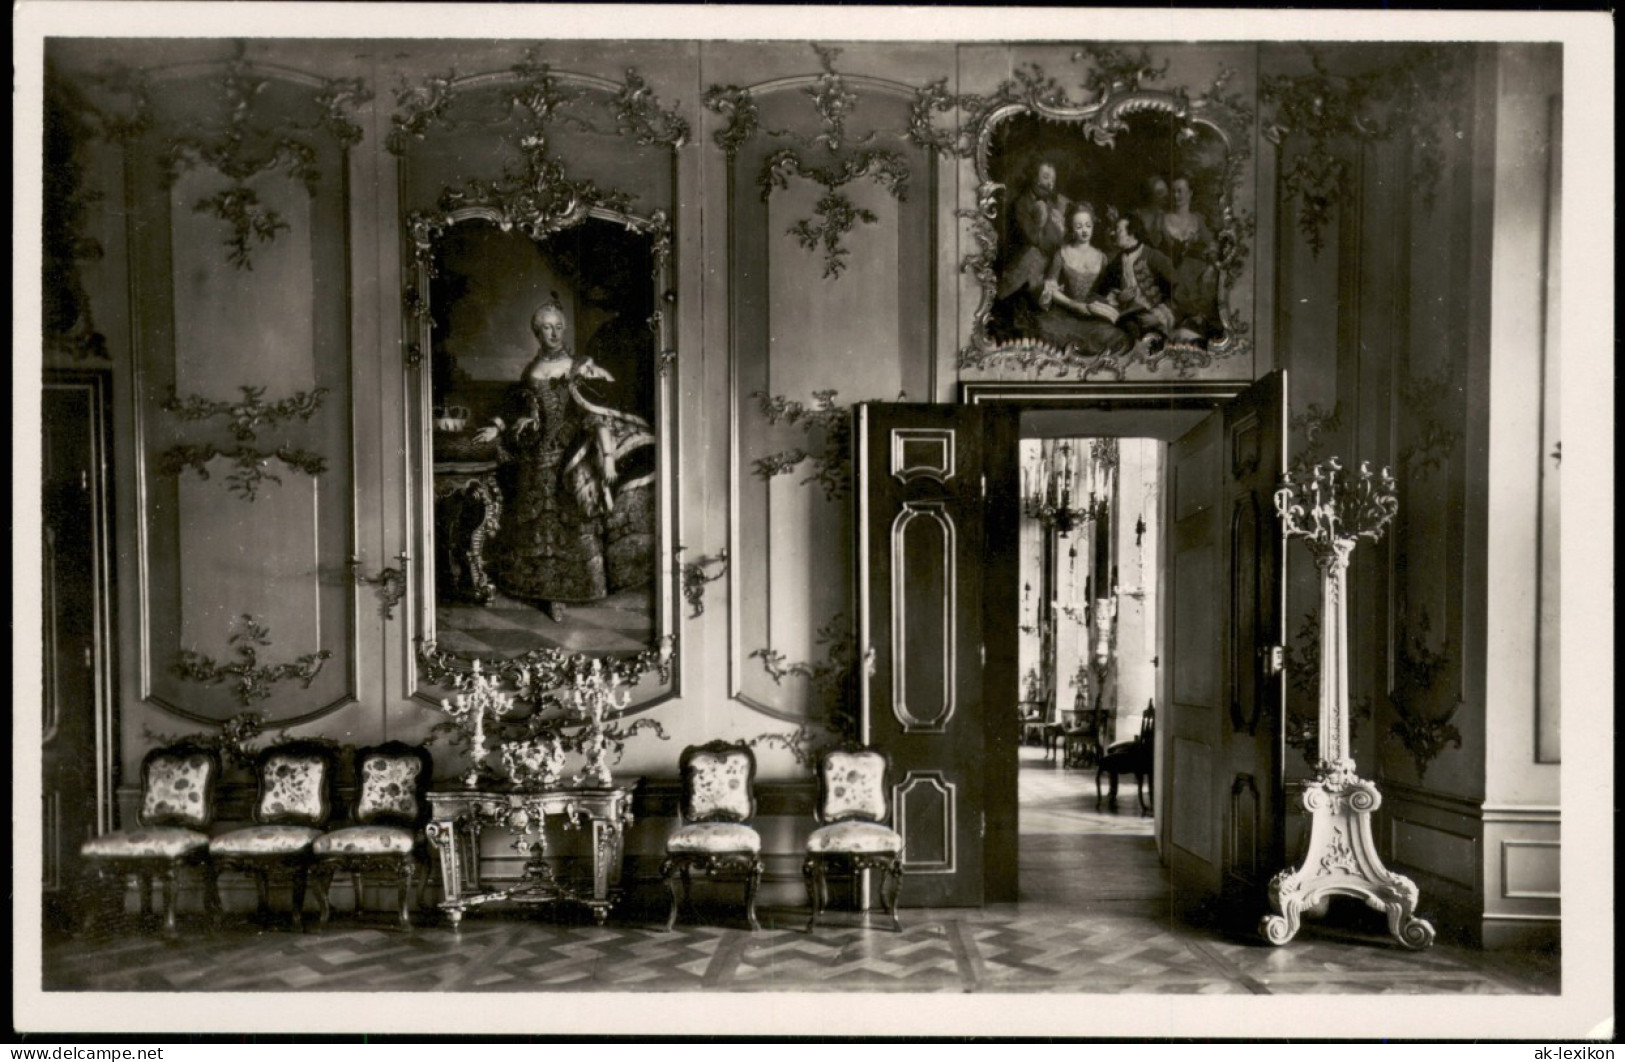 Ansichtskarte Rudolstadt Schloss Heidecksburg - Festsaal 1932 - Rudolstadt